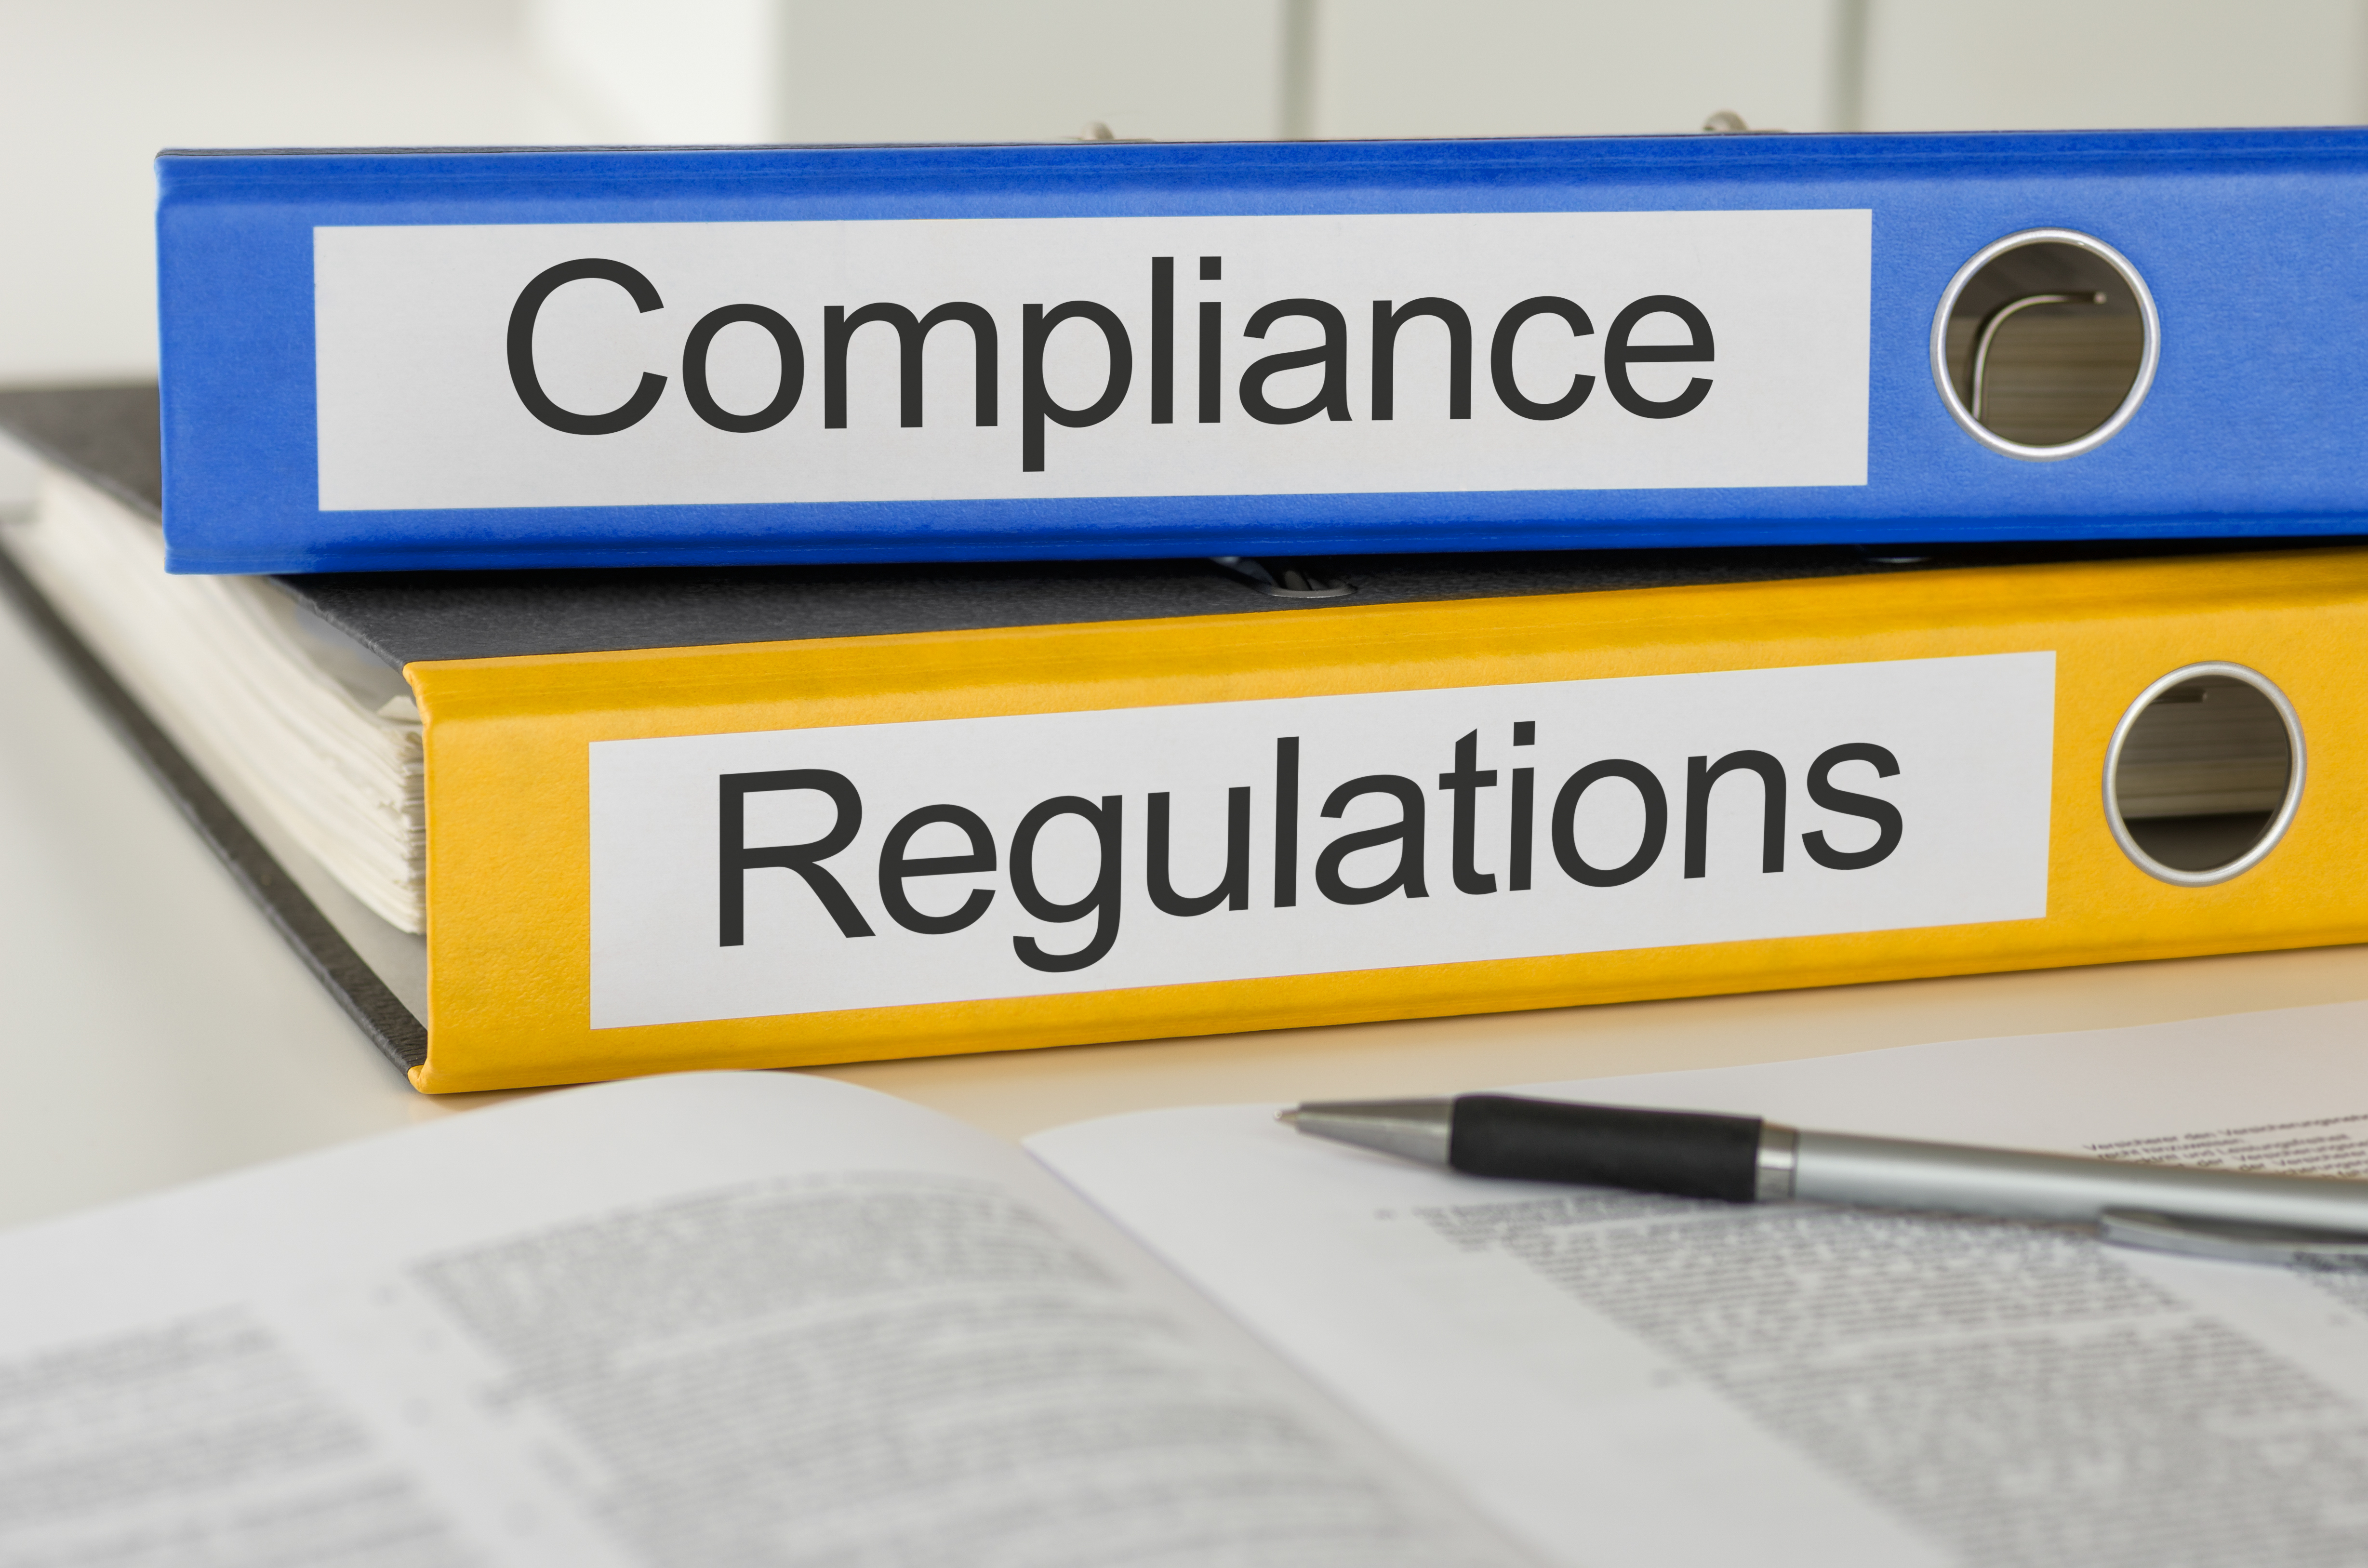 Binders - Compliance and Regulations.jpg